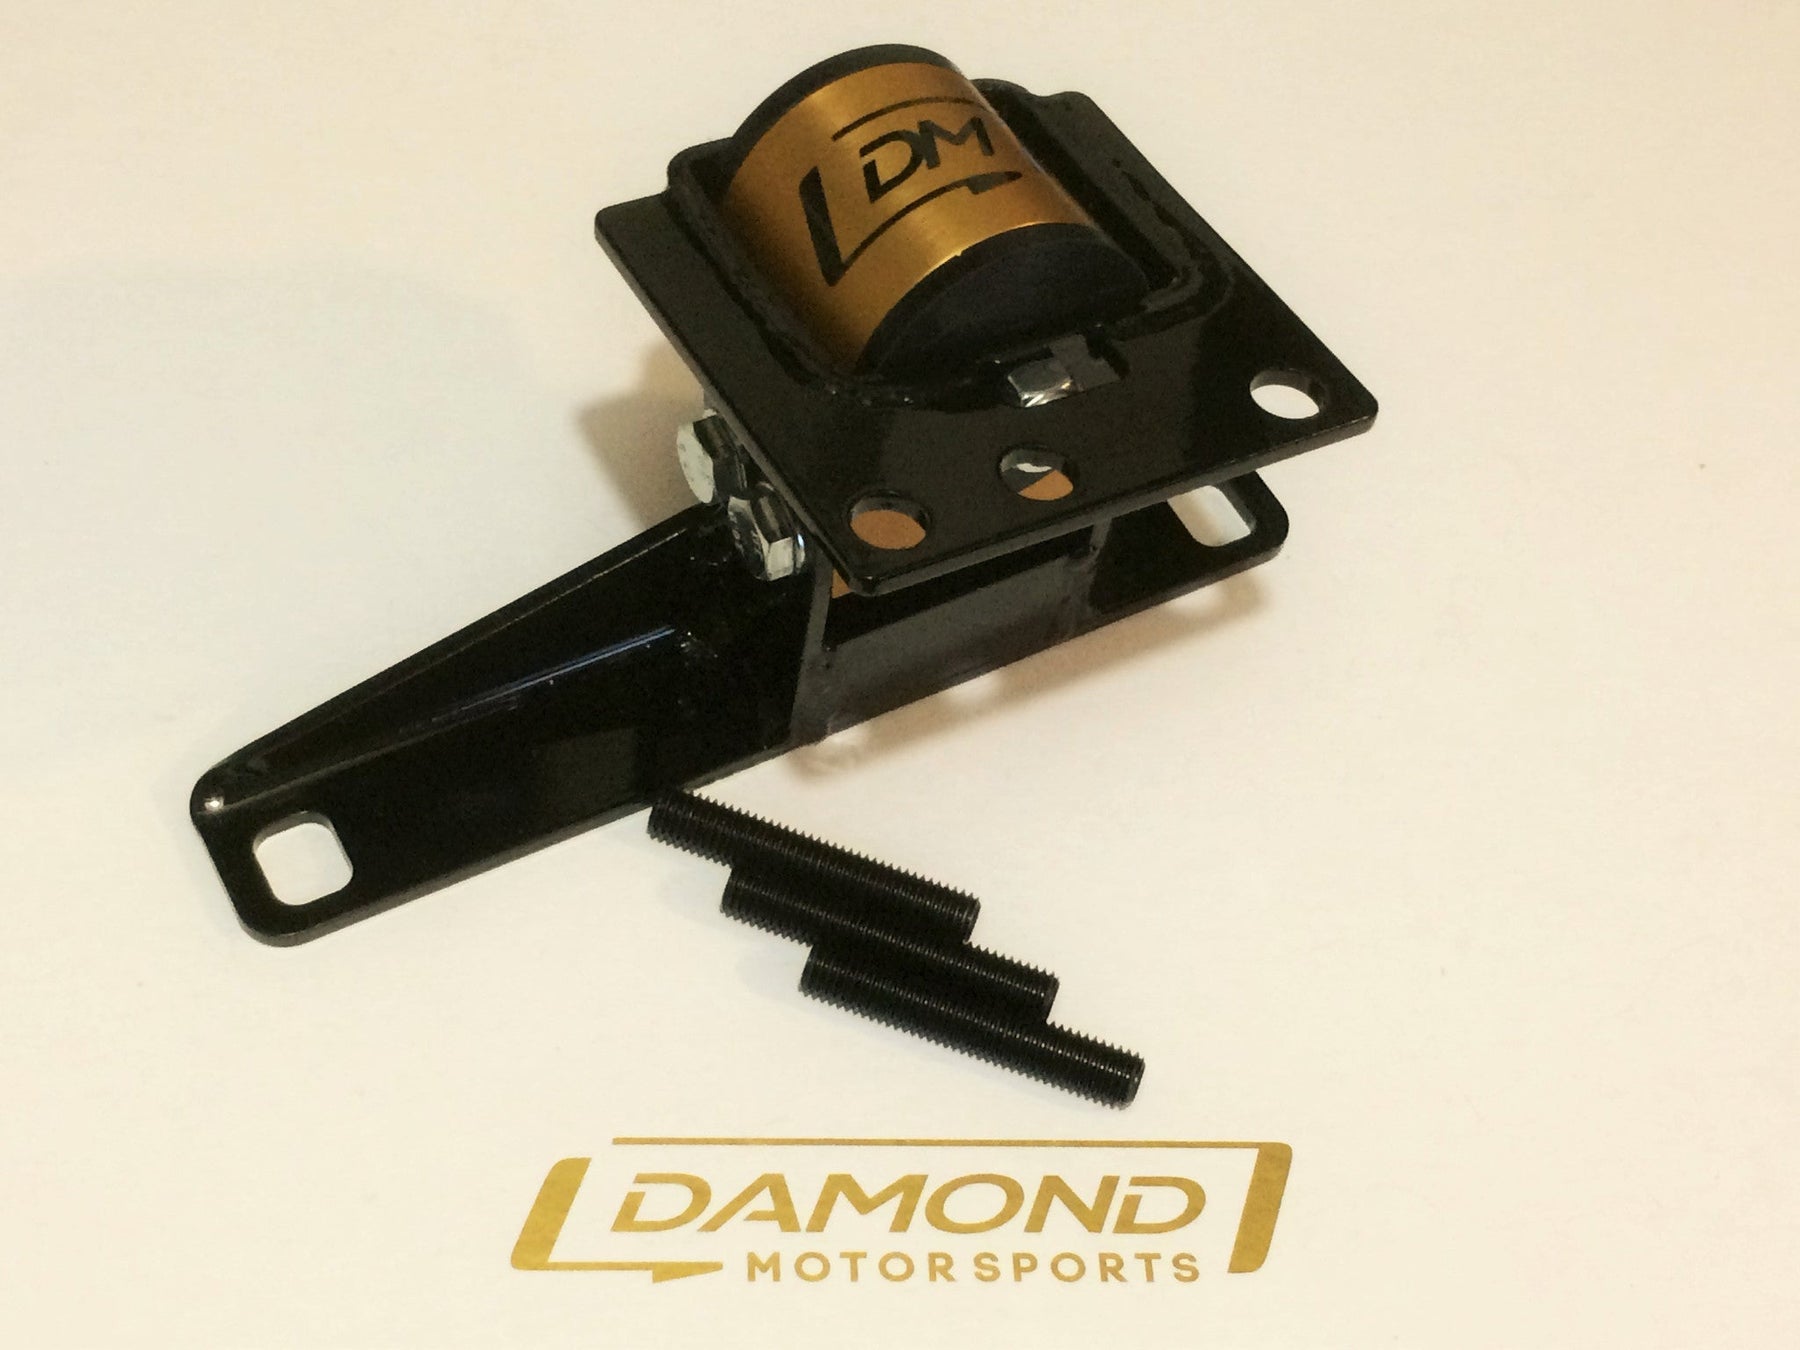 Damond Blog-Damond Motorsports Focus ST Passenger Side Motor Mount testing/review